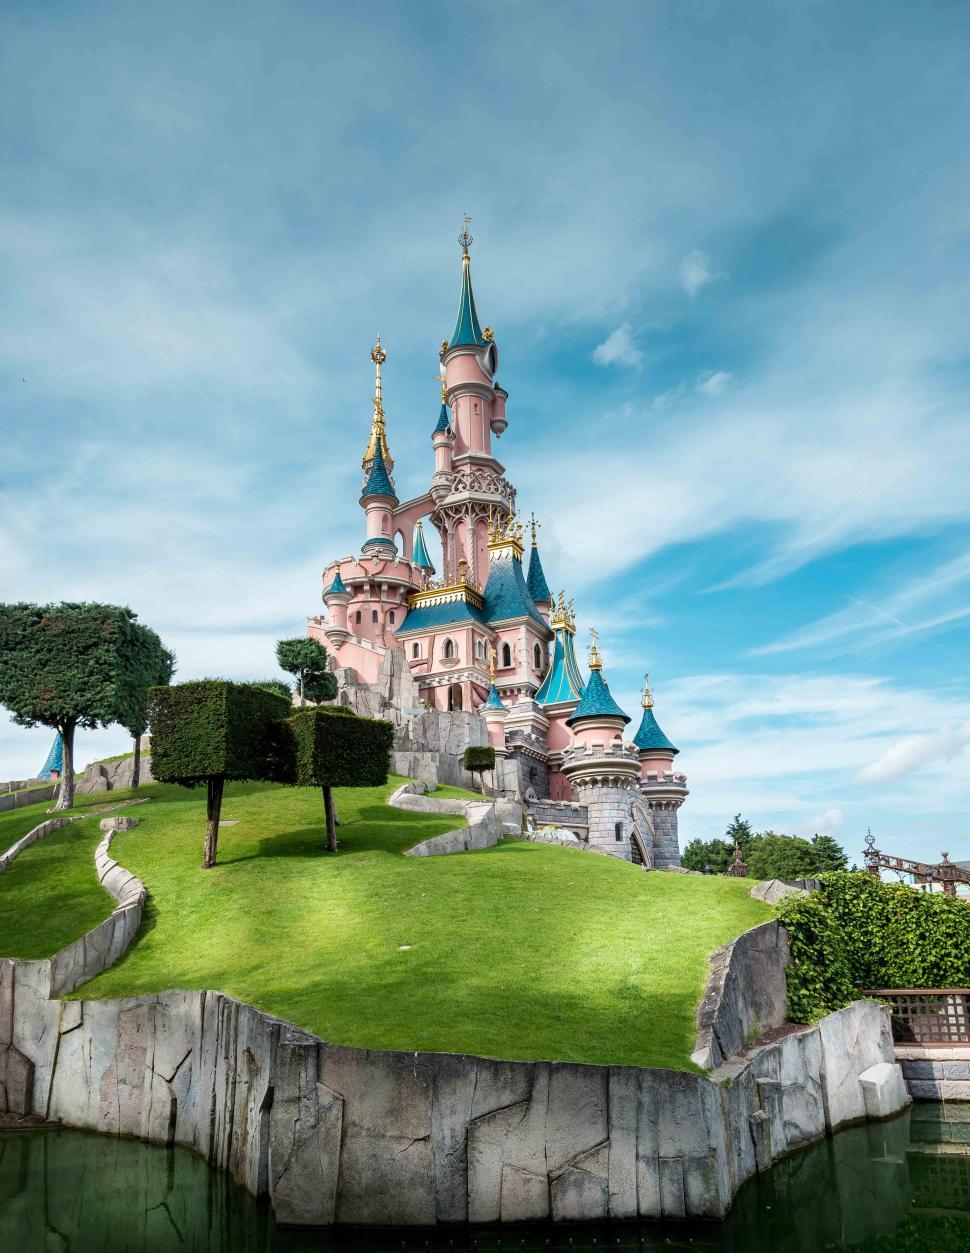 Free Image of Disneyland's dreamland in paris Disneyland 